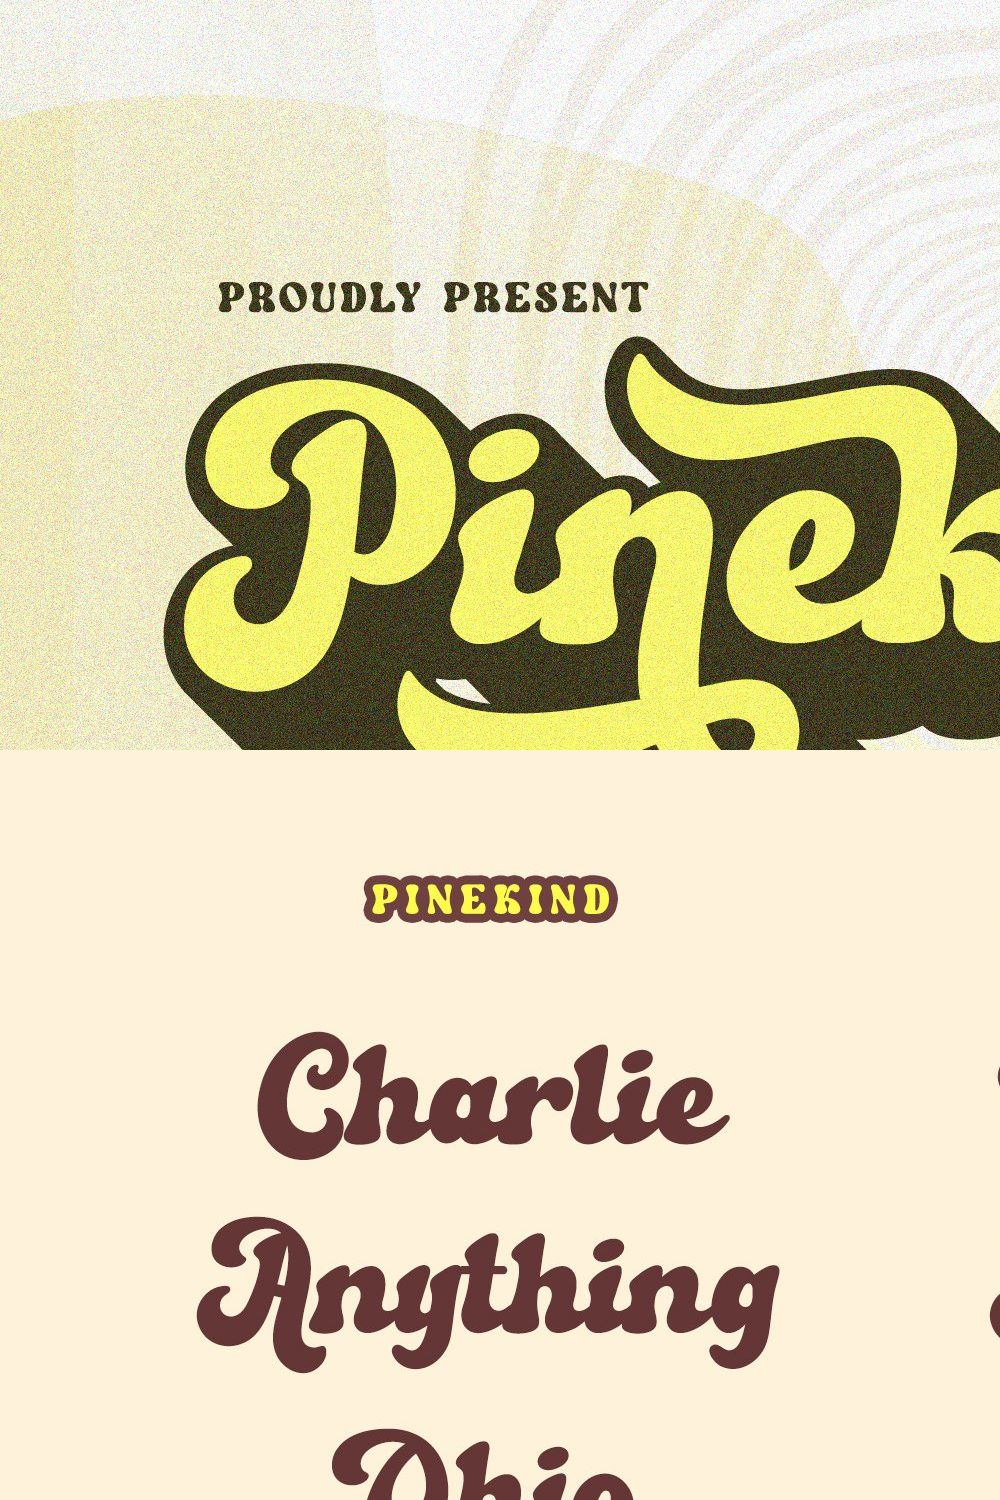 Pinekind - Groovy Retro Font pinterest preview image.